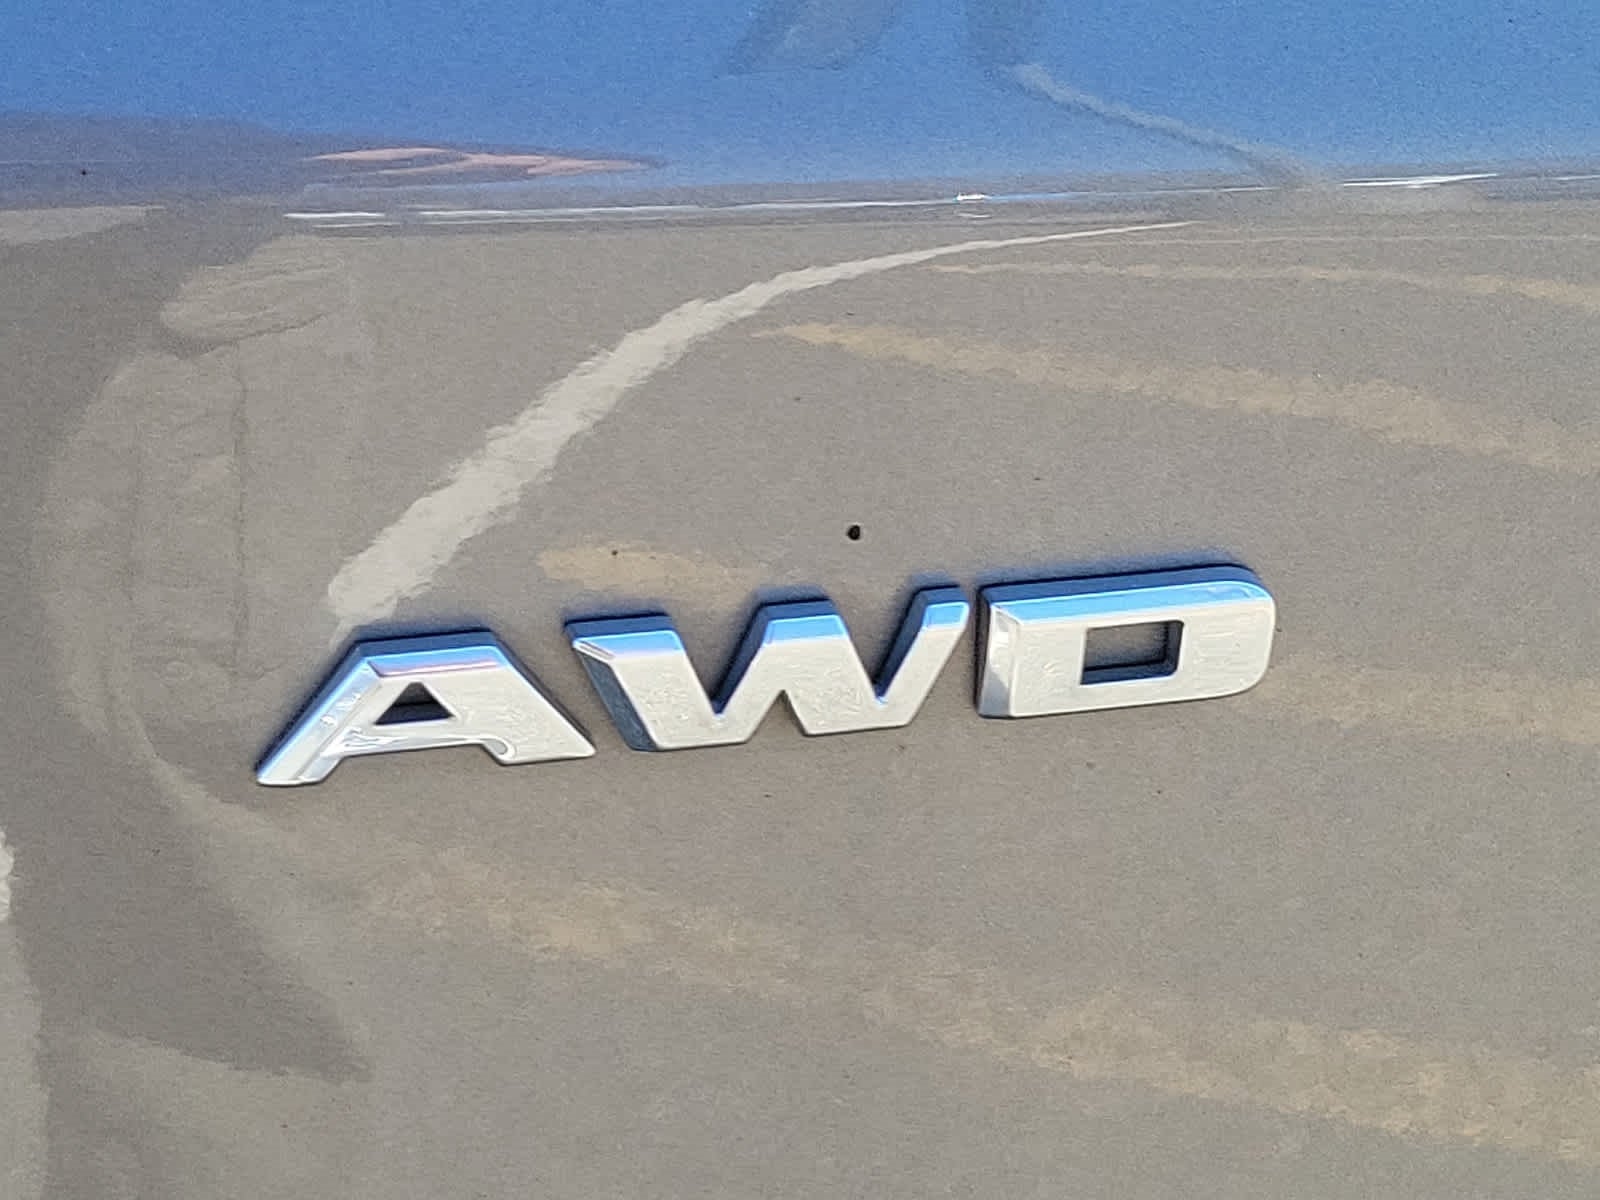 2019 Cadillac XT5 AWD 4dr Luxury